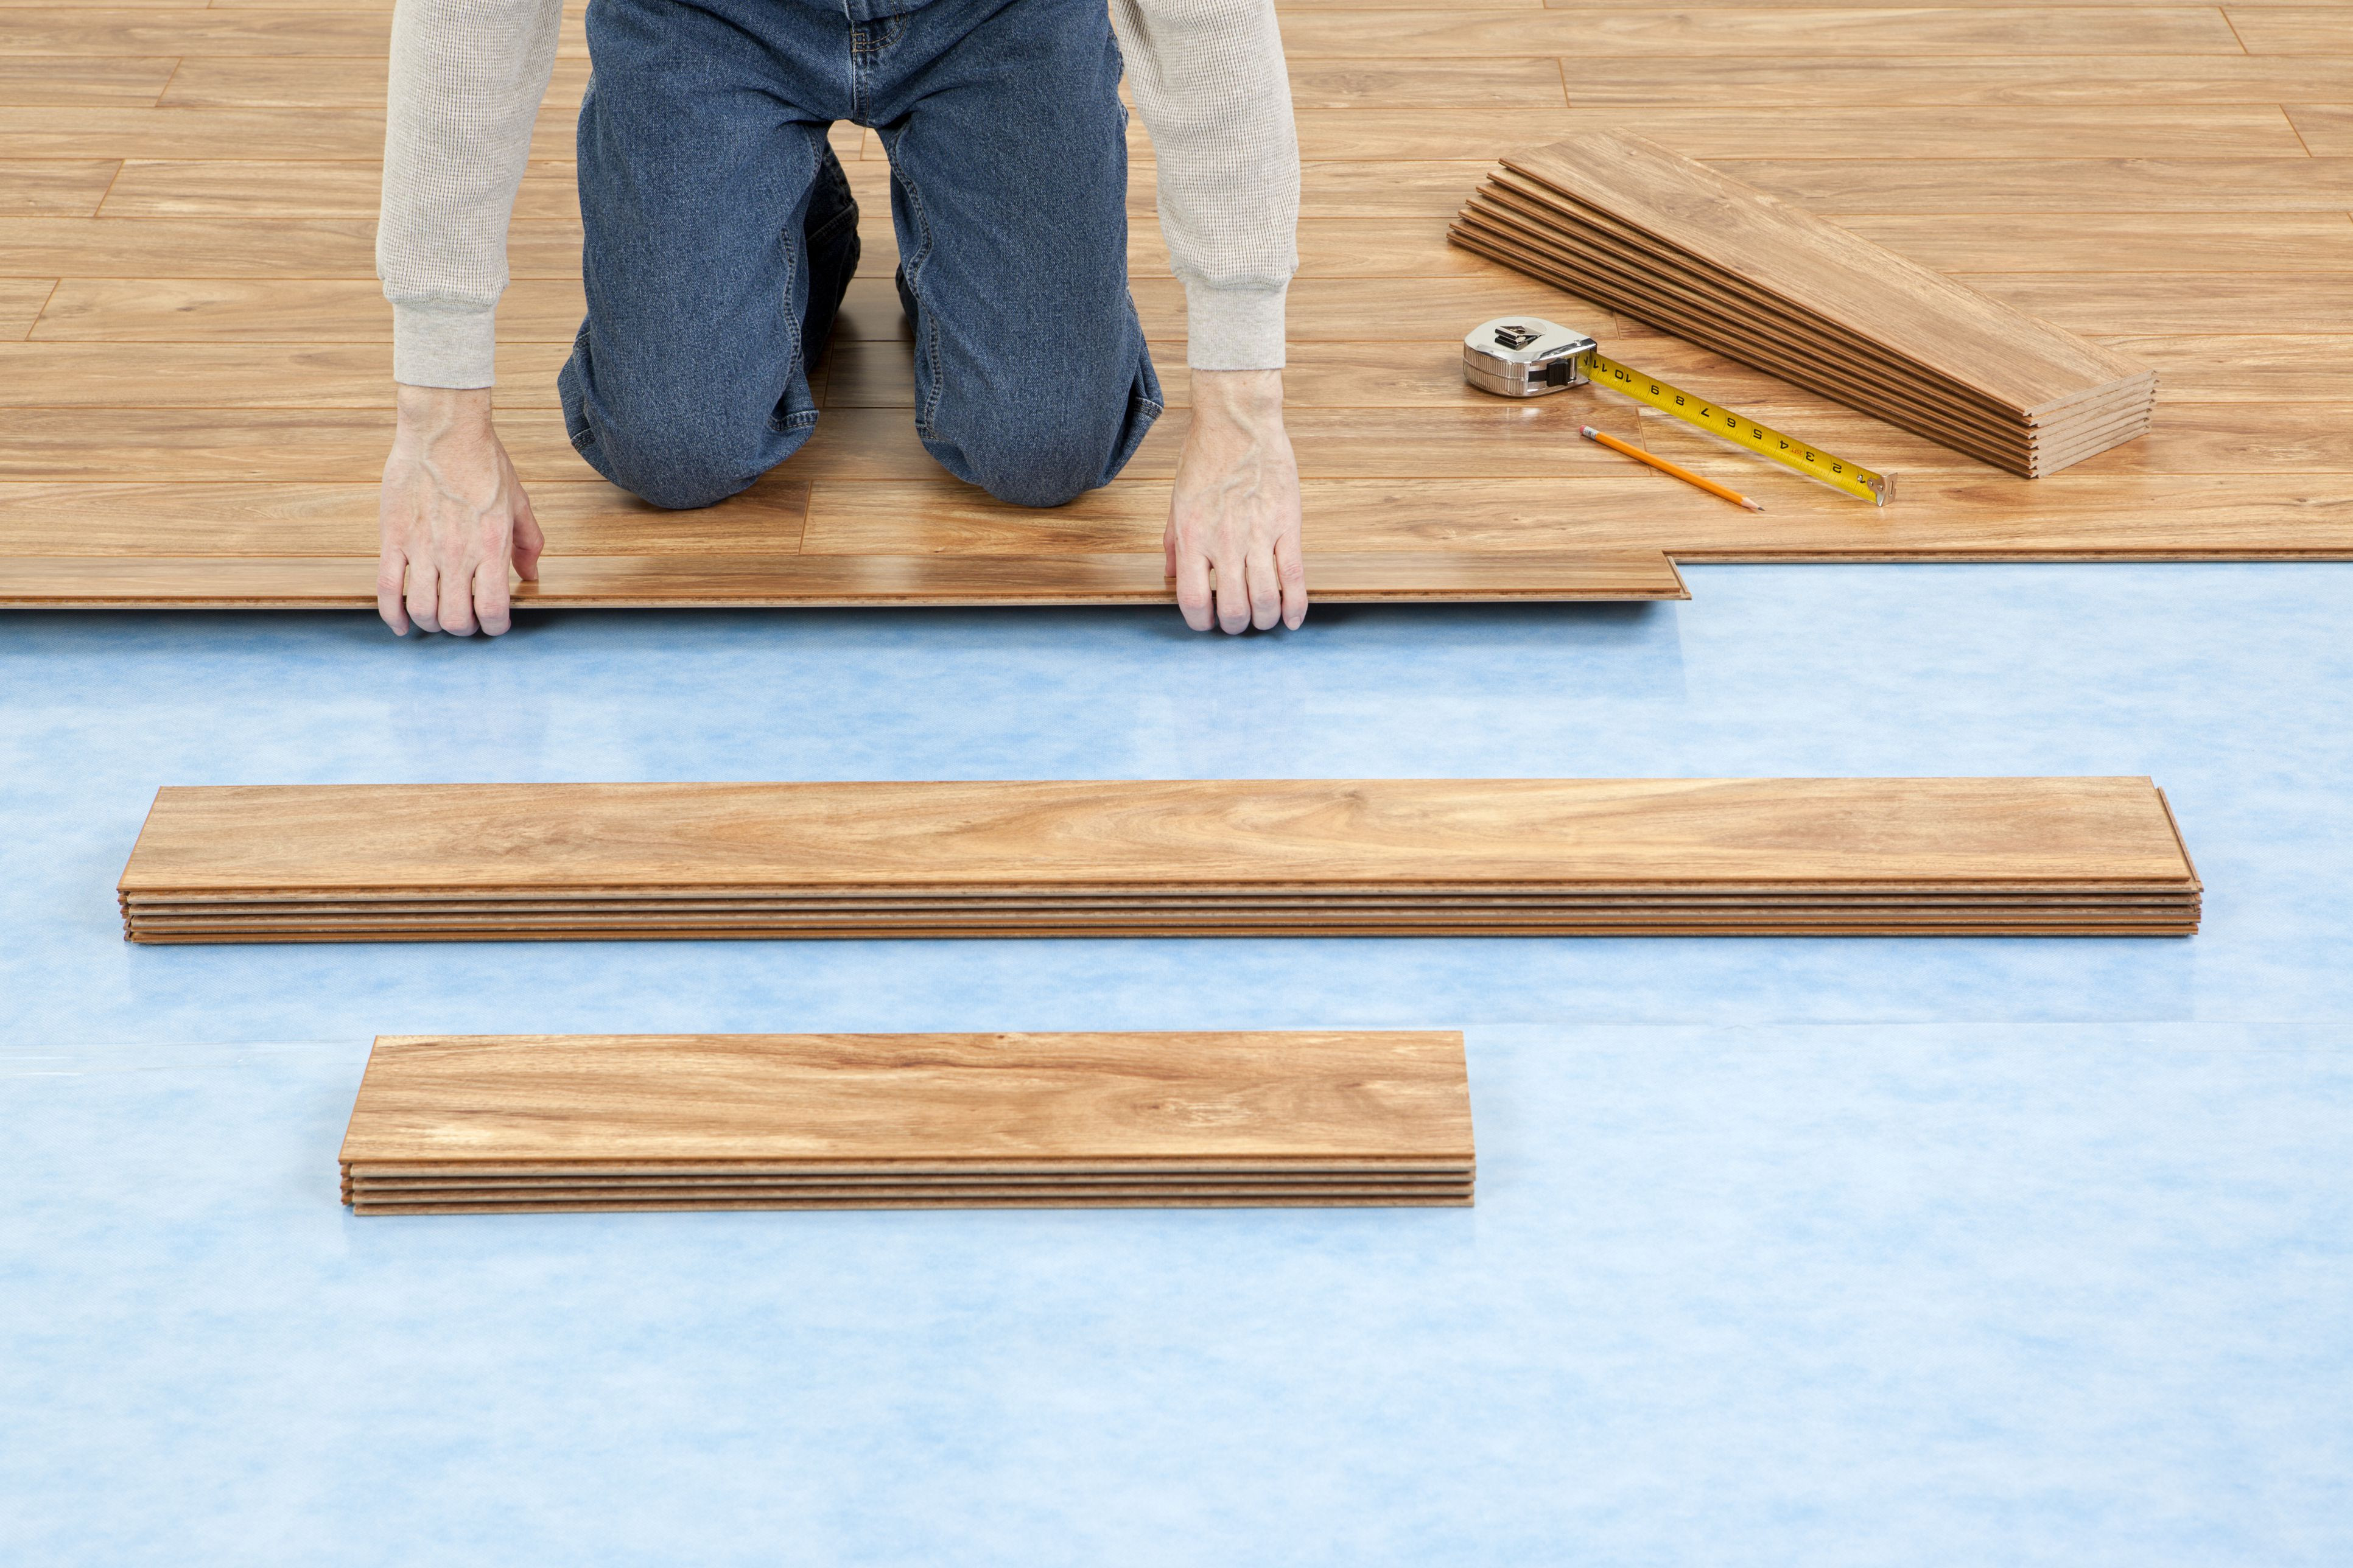 aquabar b hardwood flooring underlayment of installing laminate flooring with attached underlayment intended for new floor installation 155283725 582735c03df78c6f6af8ac80